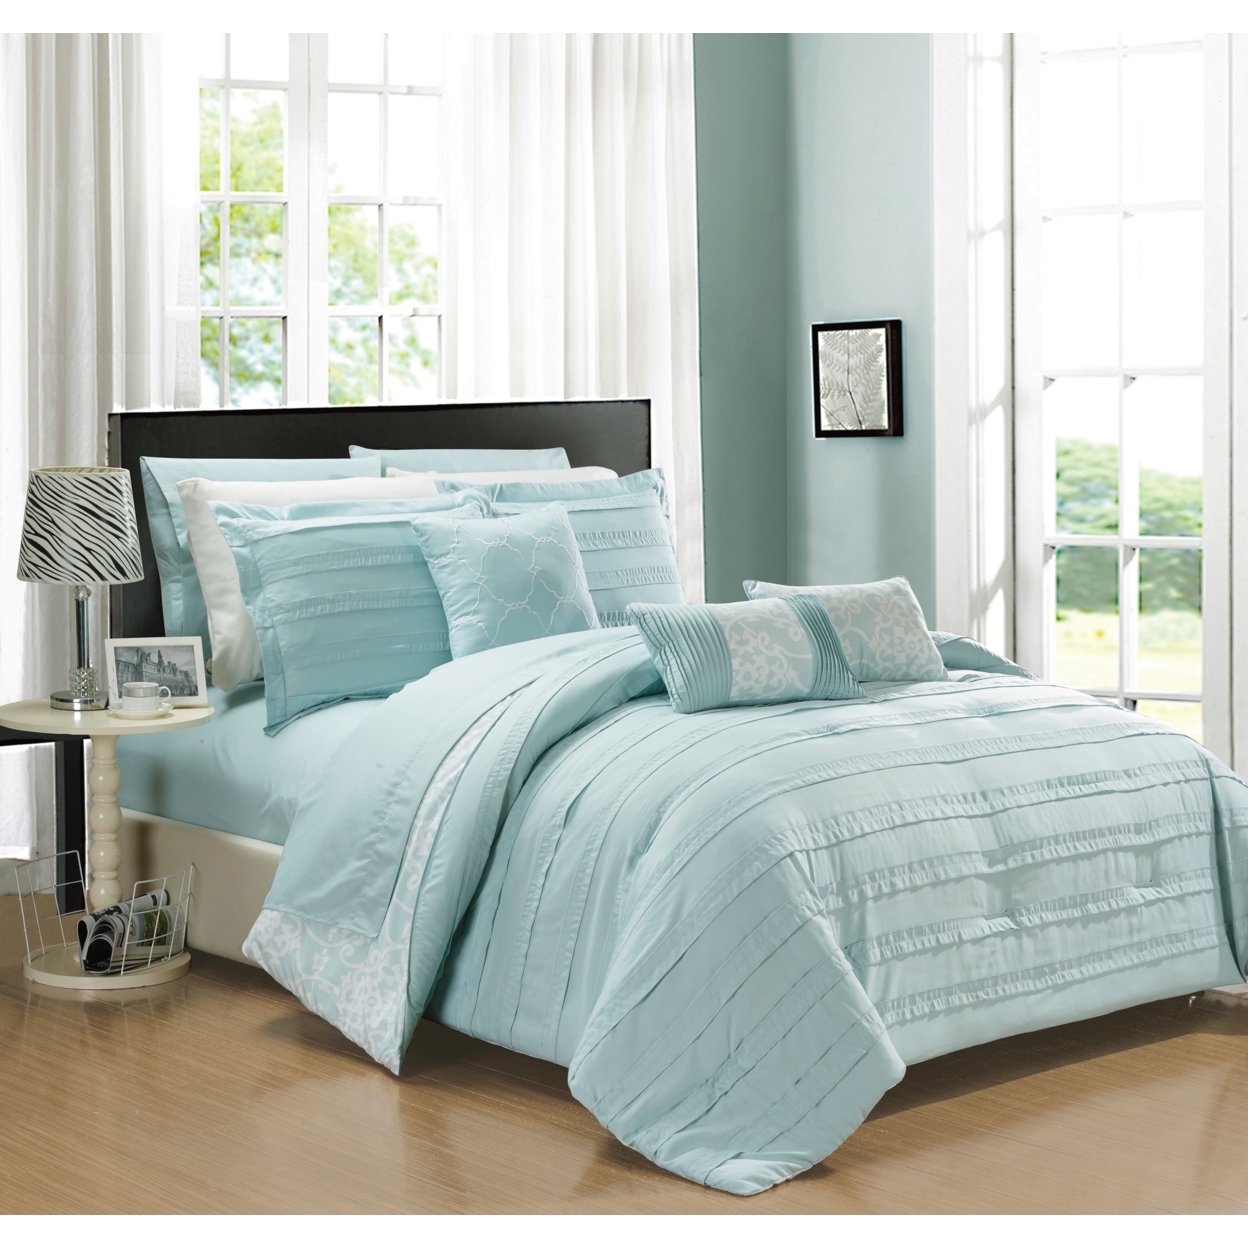 10-Piece Reversible Bed In A Bag Comforter & Sheet Set, Multiple Colors - Plum, Queen